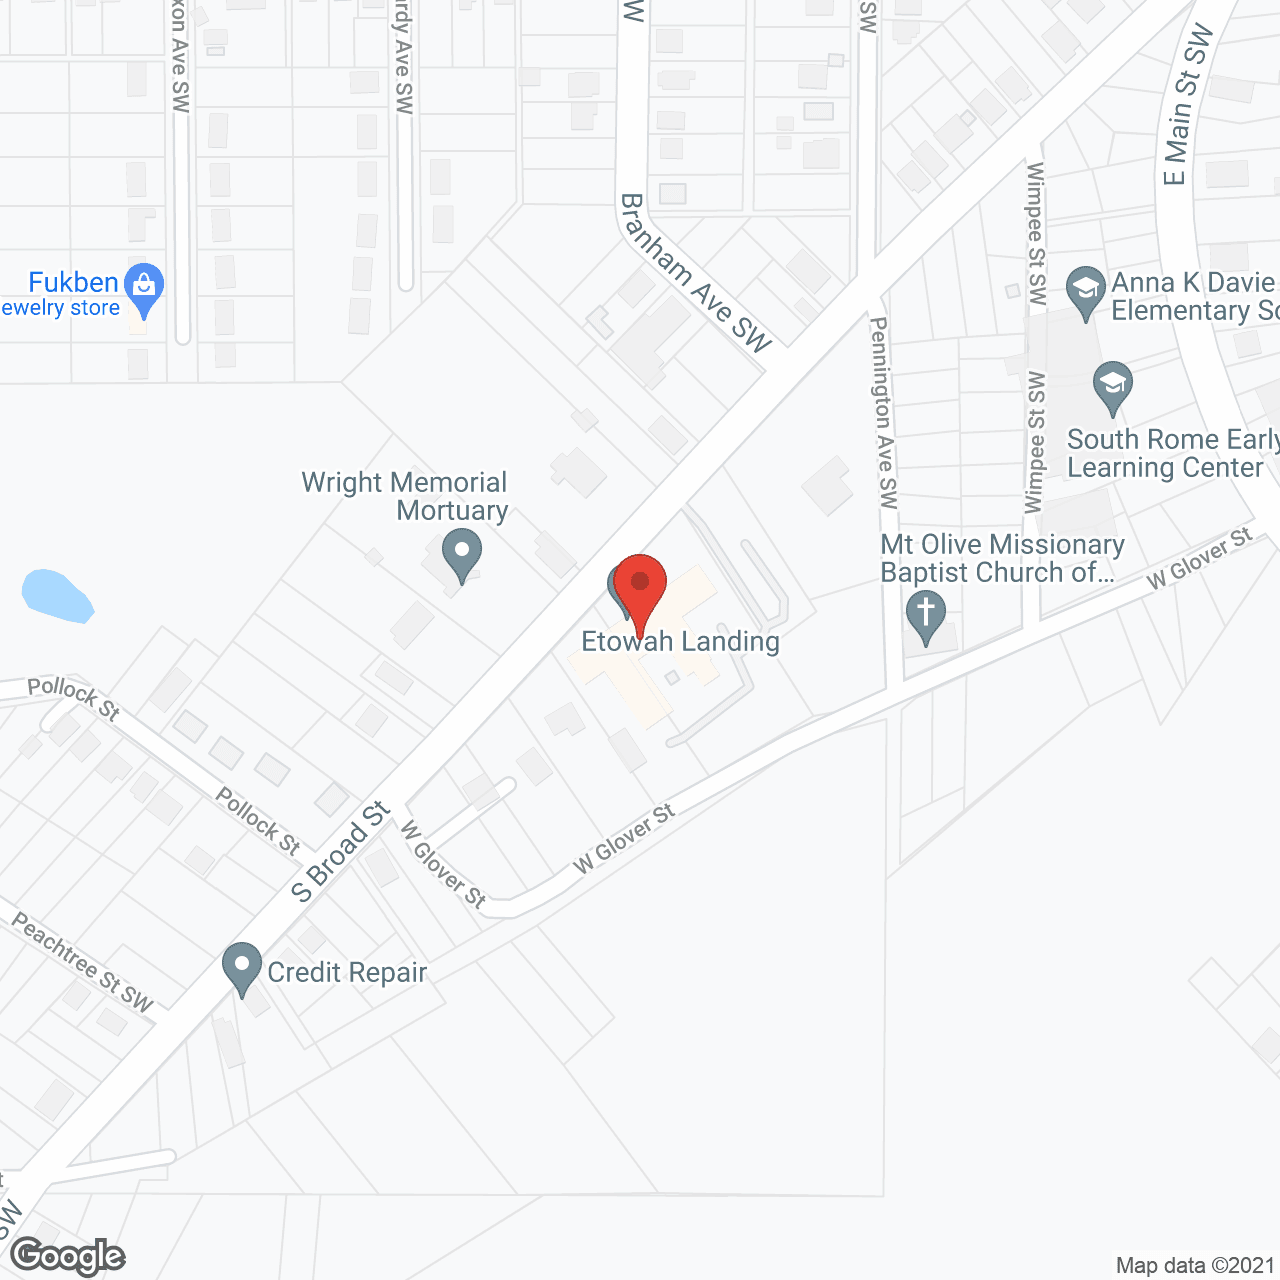 Etowah Landing Care and Rehabilitation Center in google map